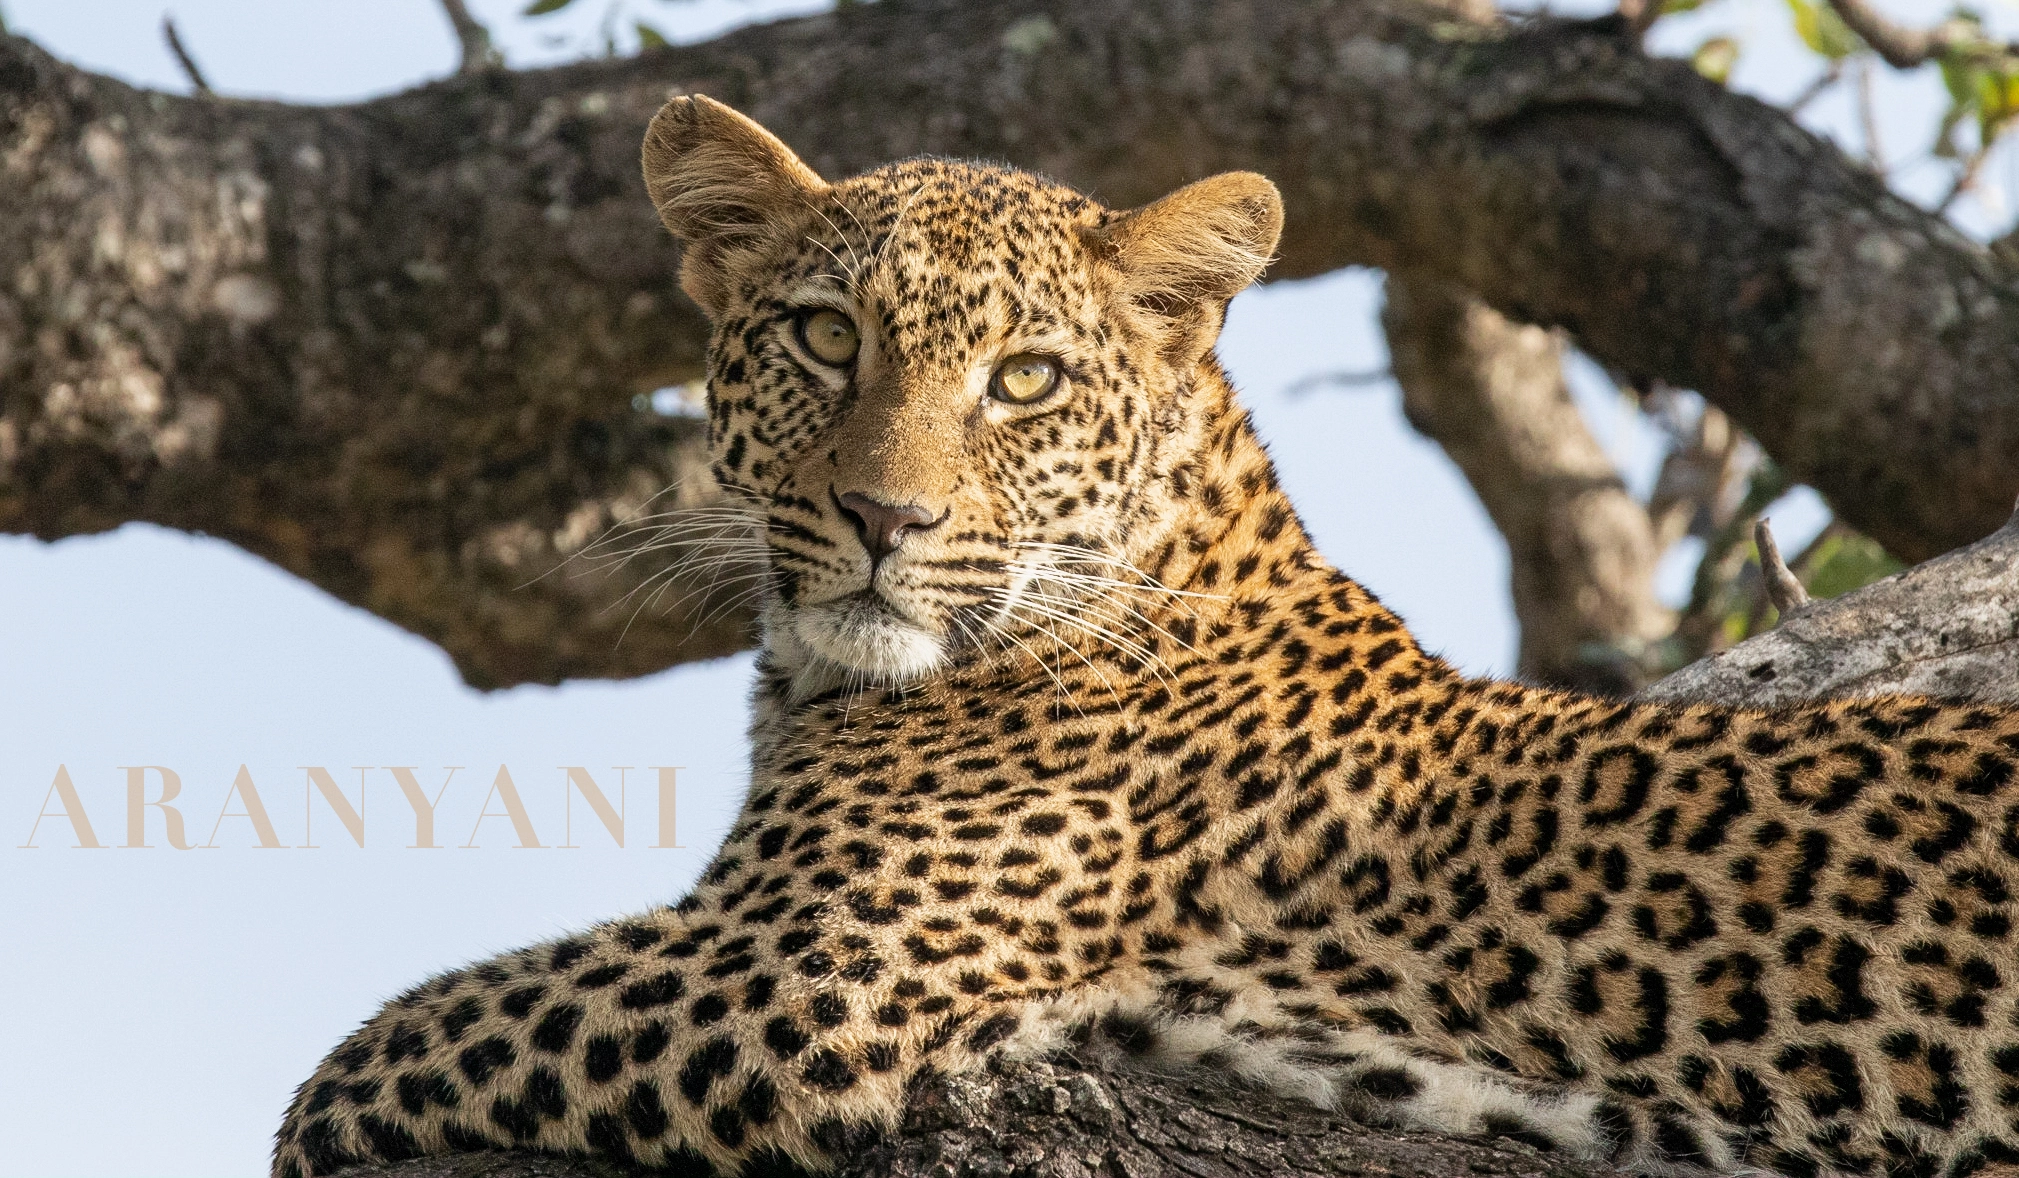 kambaku-river-lodge-aranyani-leopard-of-the-kruger-park-on-safari-footer